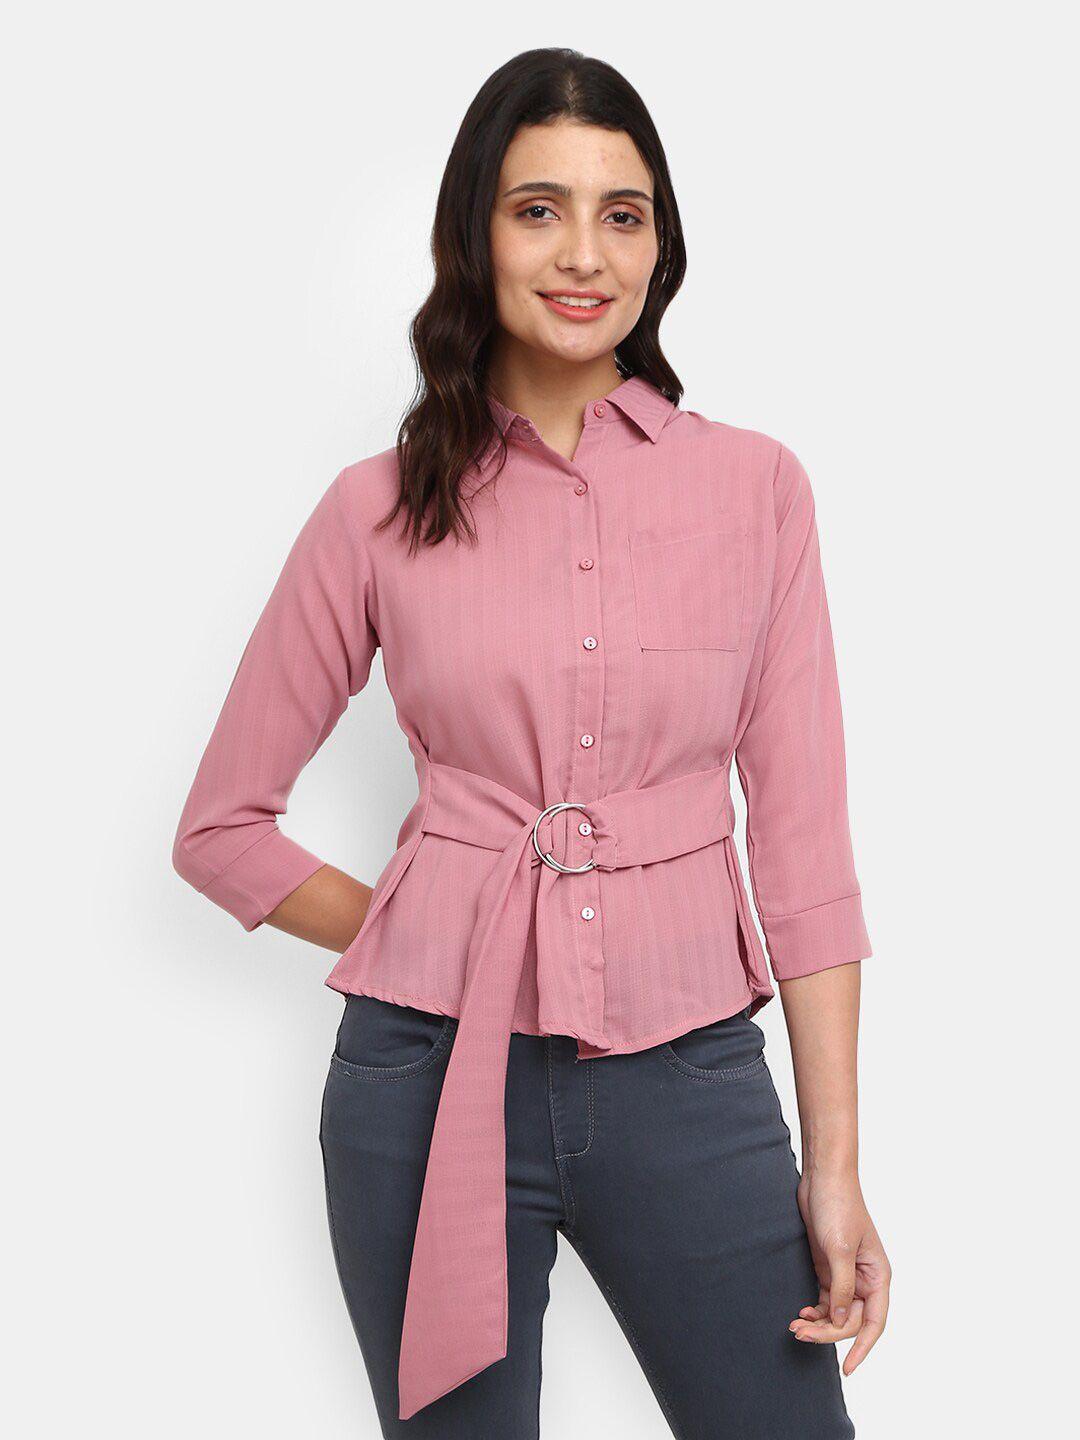 v-mart women pink cotton casual shirt